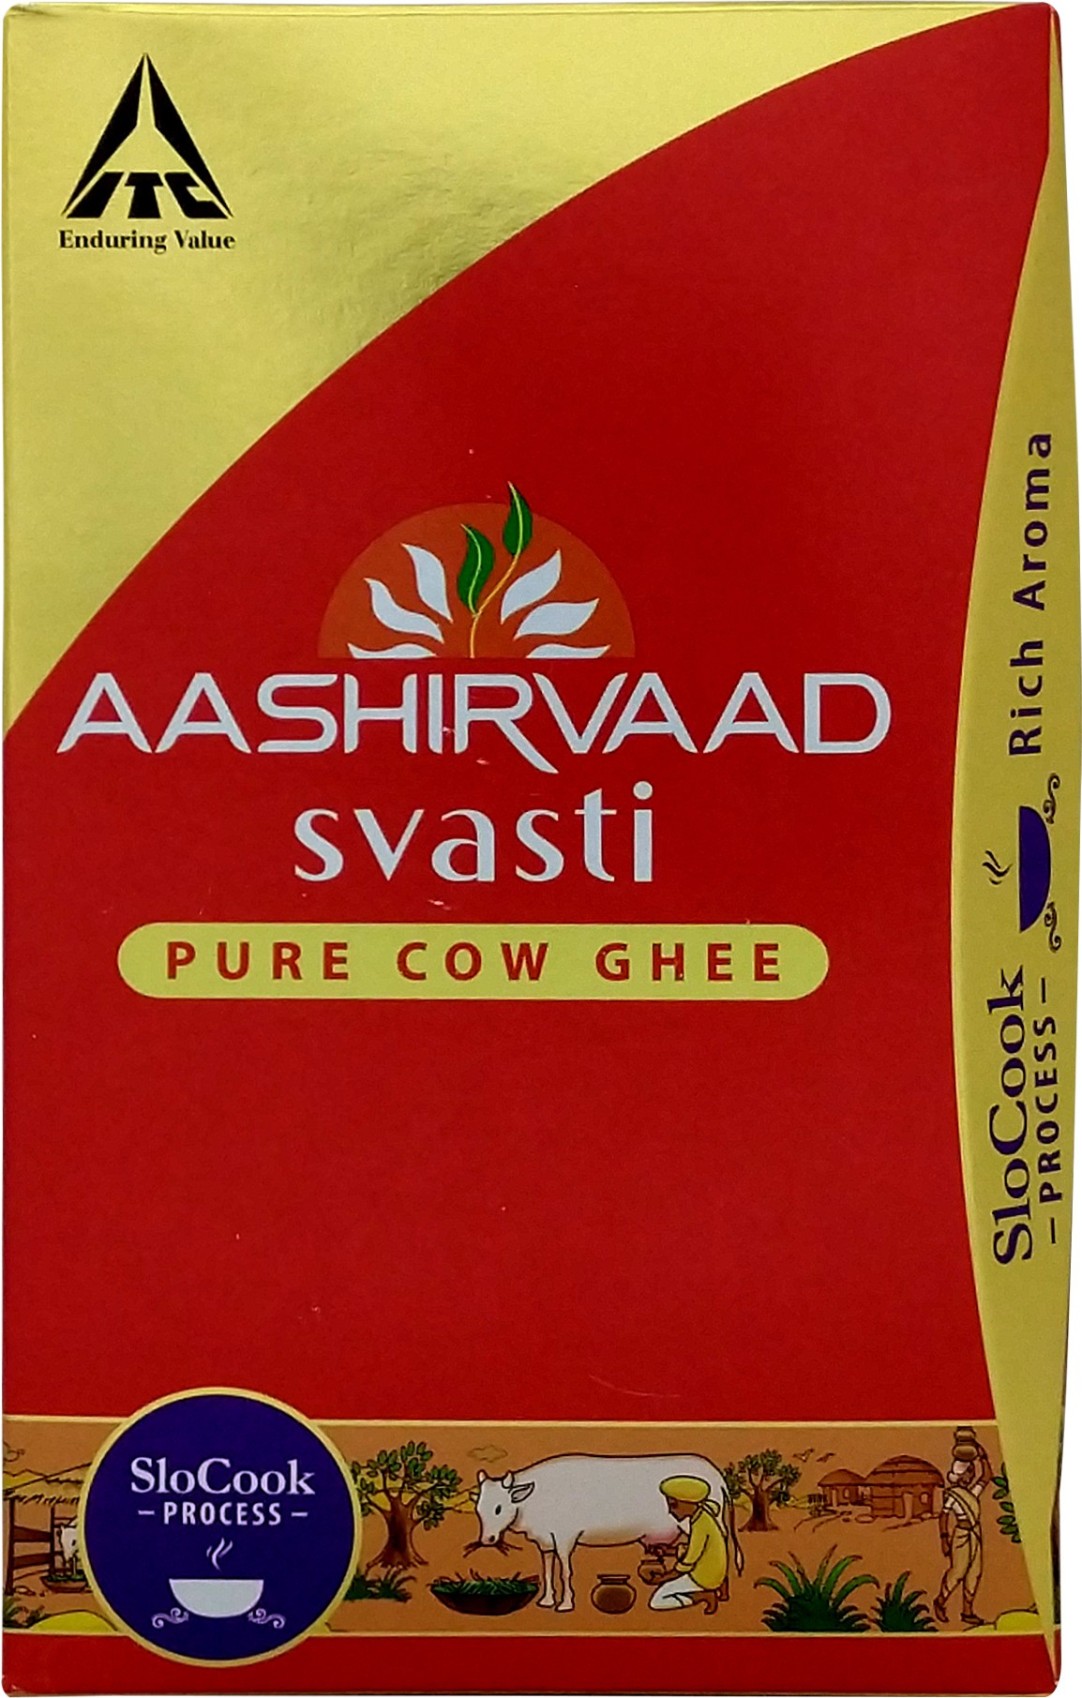 Aashirvaad Svasti Pure Cow Ghee (Carton), 1L